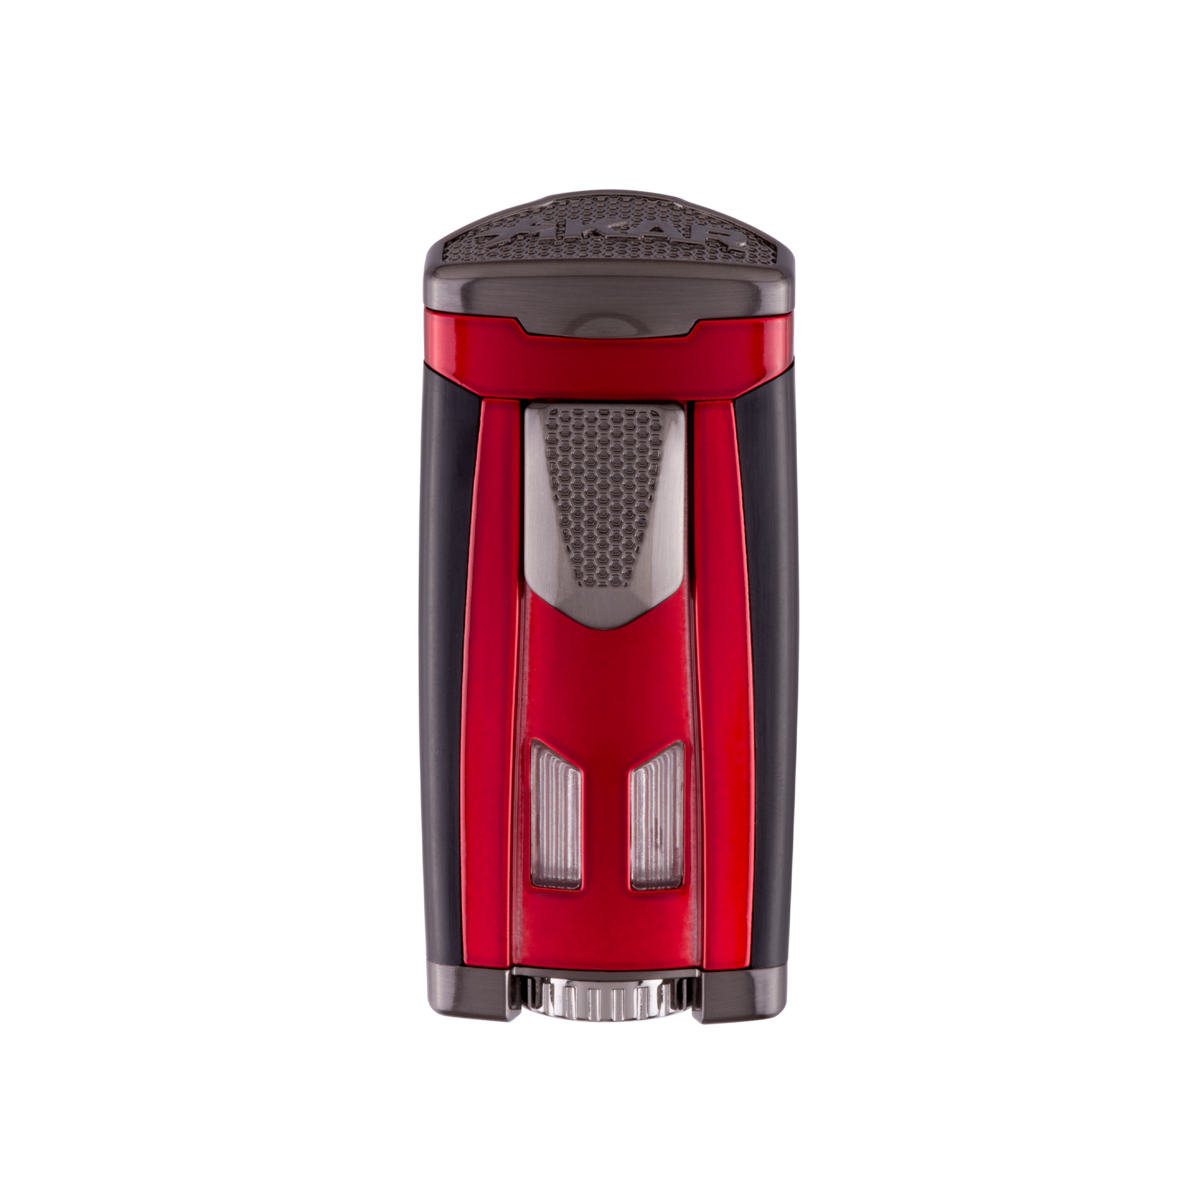 Xikar HP3 Lighter | Triple Jet Flame